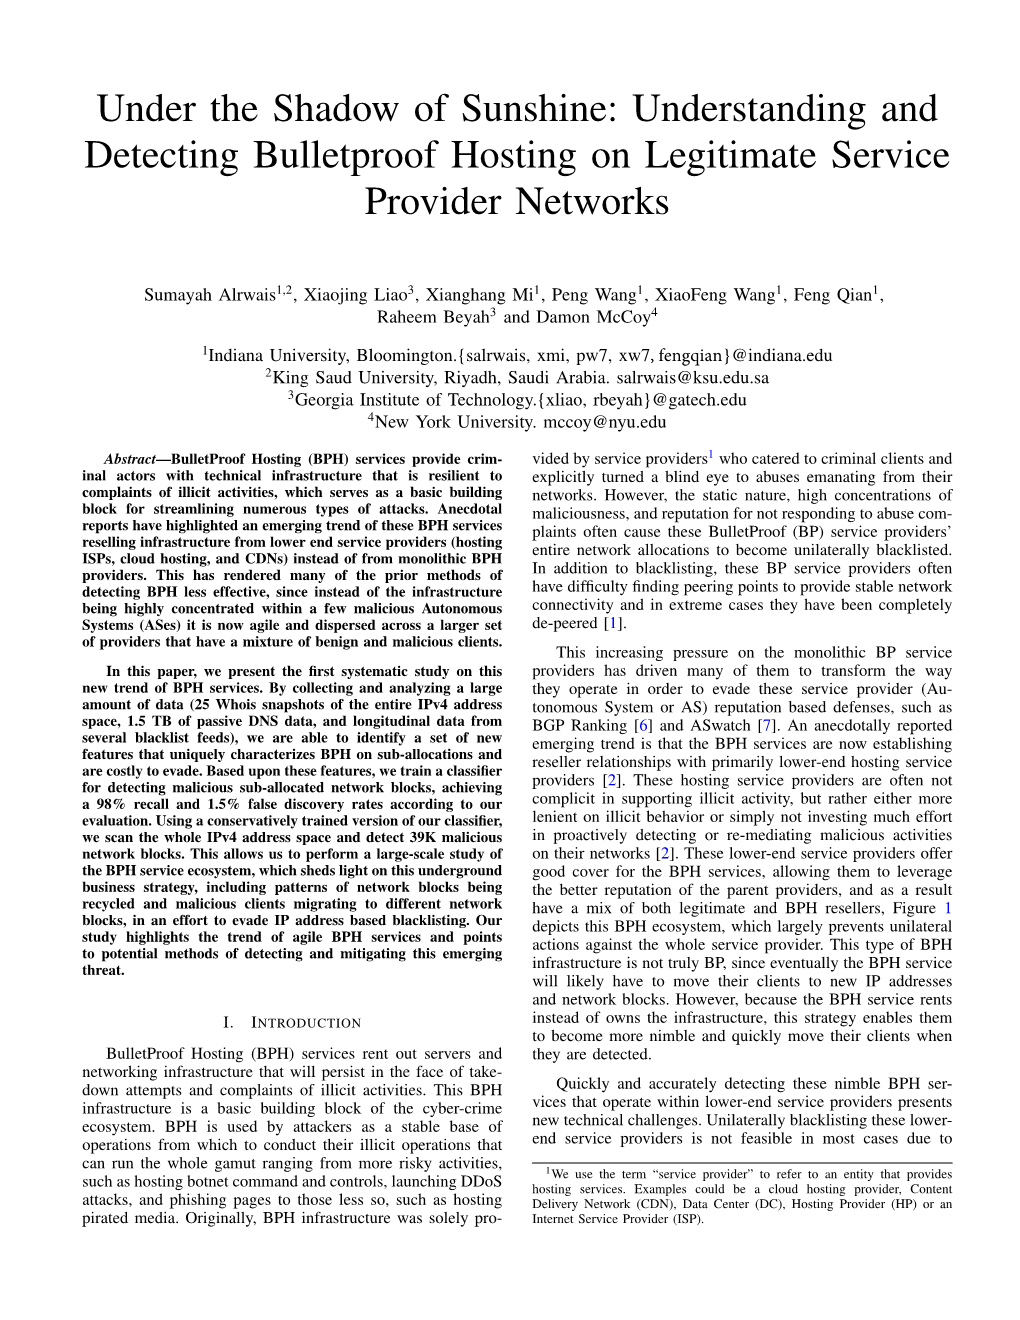 Under the Shadow of Sunshine: Understanding and Detecting Bulletproof Hosting on Legitimate Service Provider Networks